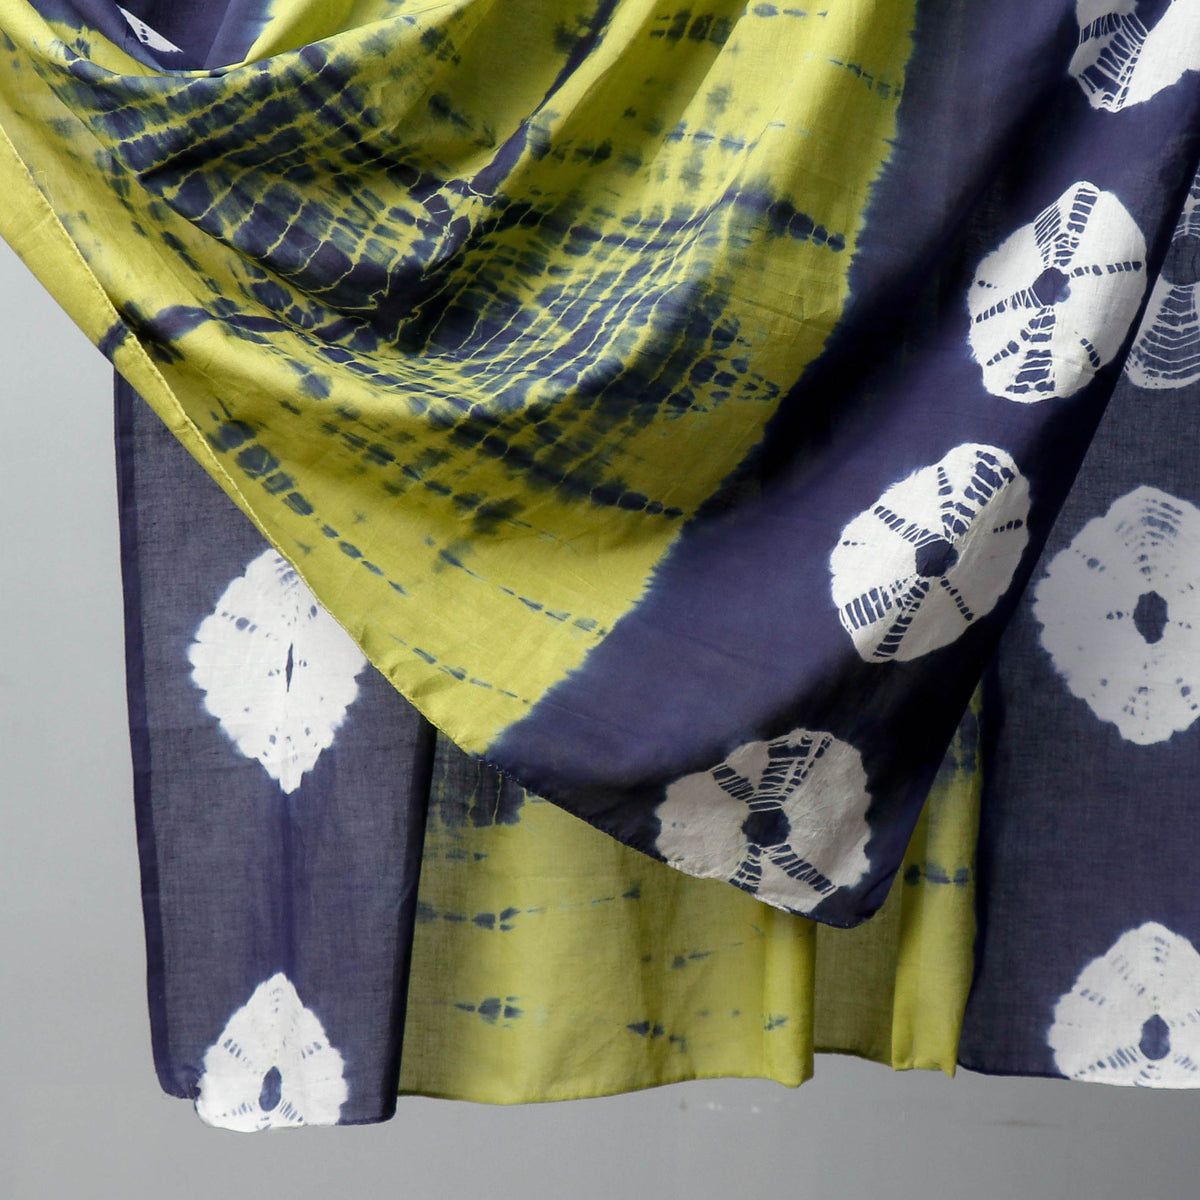 Shibori Tie-Dye Soft Cotton Dupatta/Wrap Sarong Pareo/Beach Wear